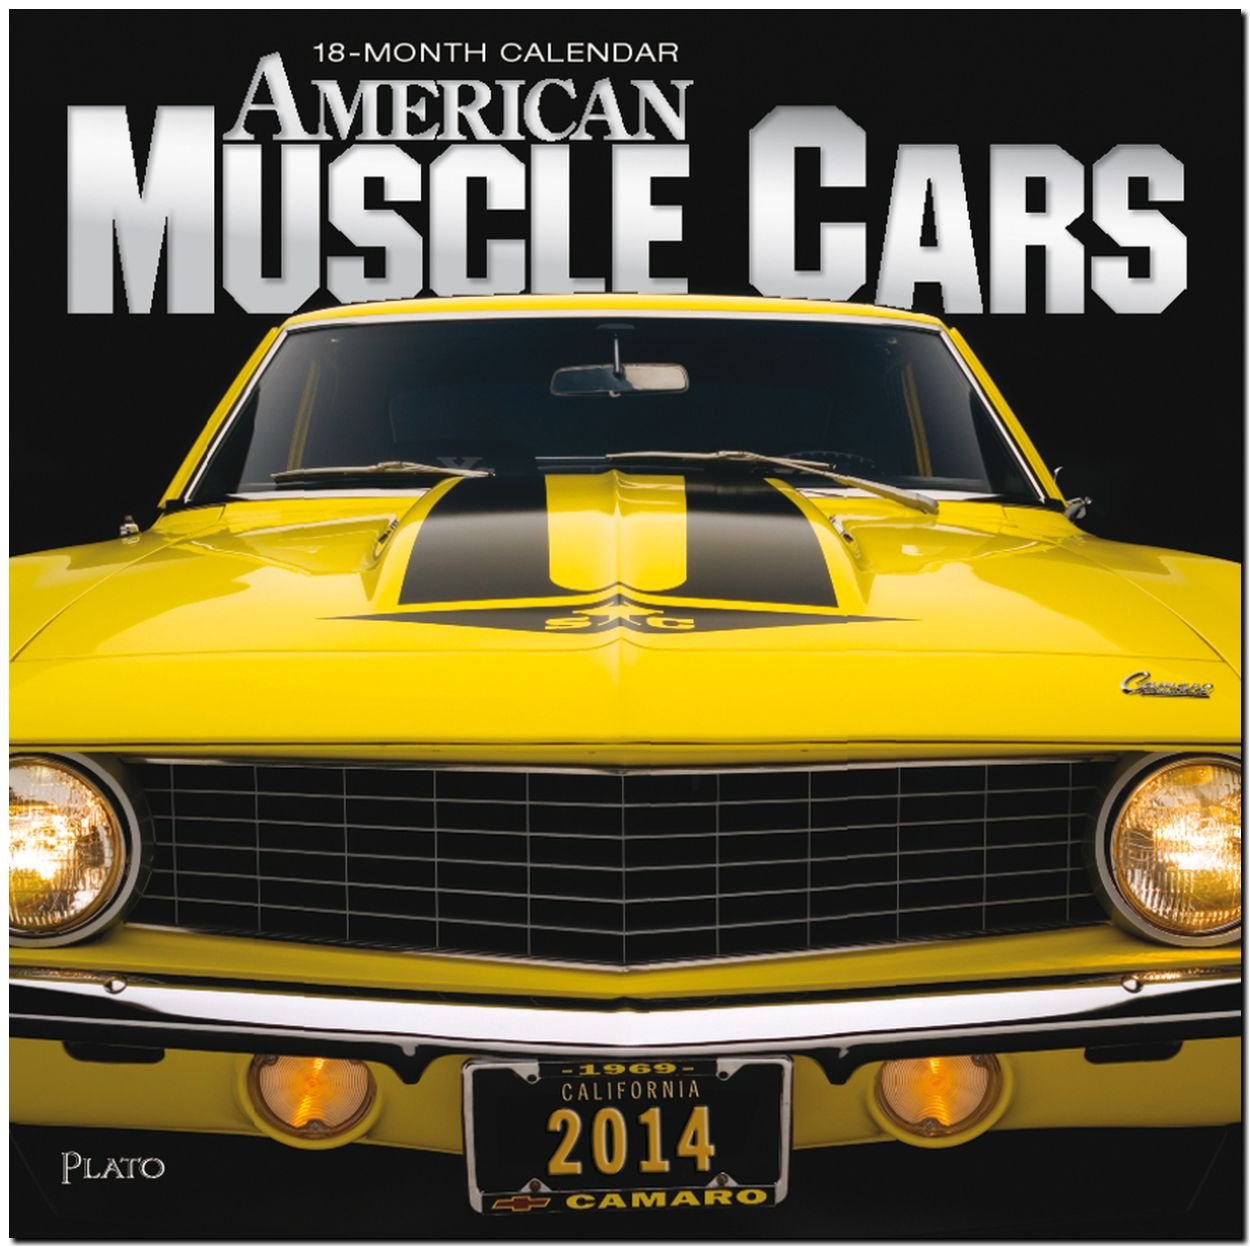 American Muscle Cars calendar 2014